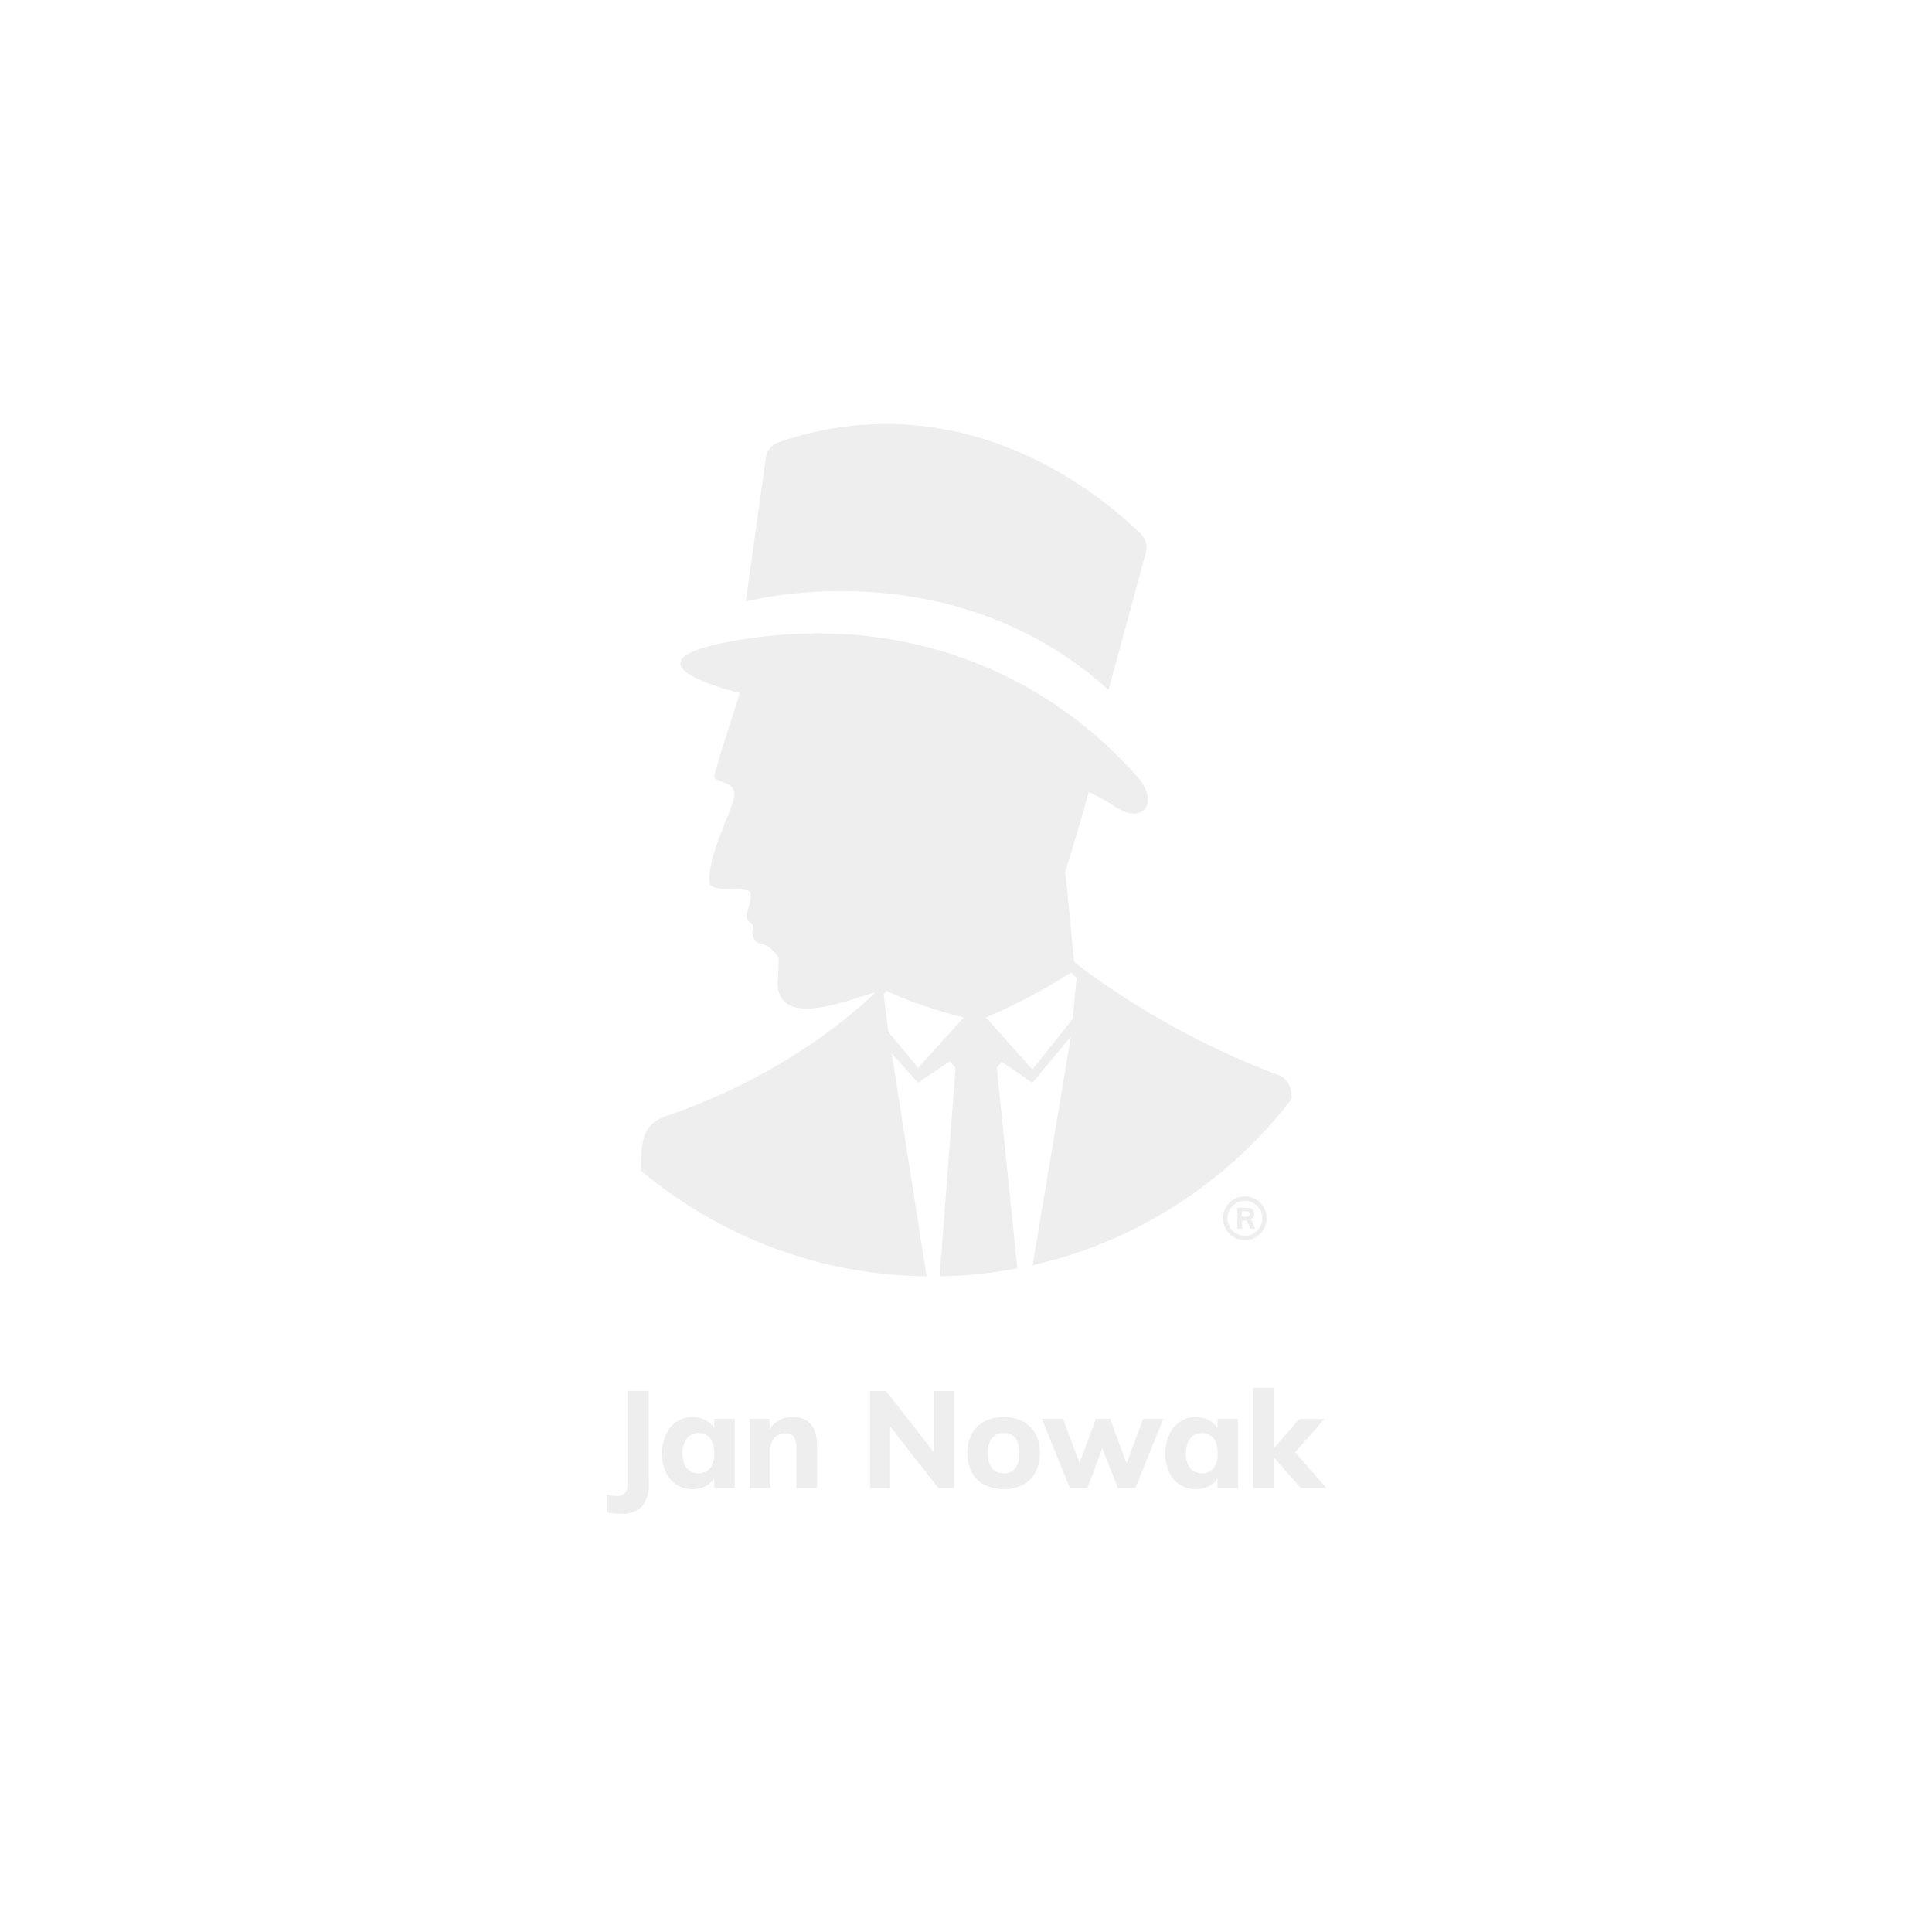 JAN NOWAK model BARTEK 1360x1720x450 szafa socjalna ubraniowa 10-drzwiowa szara